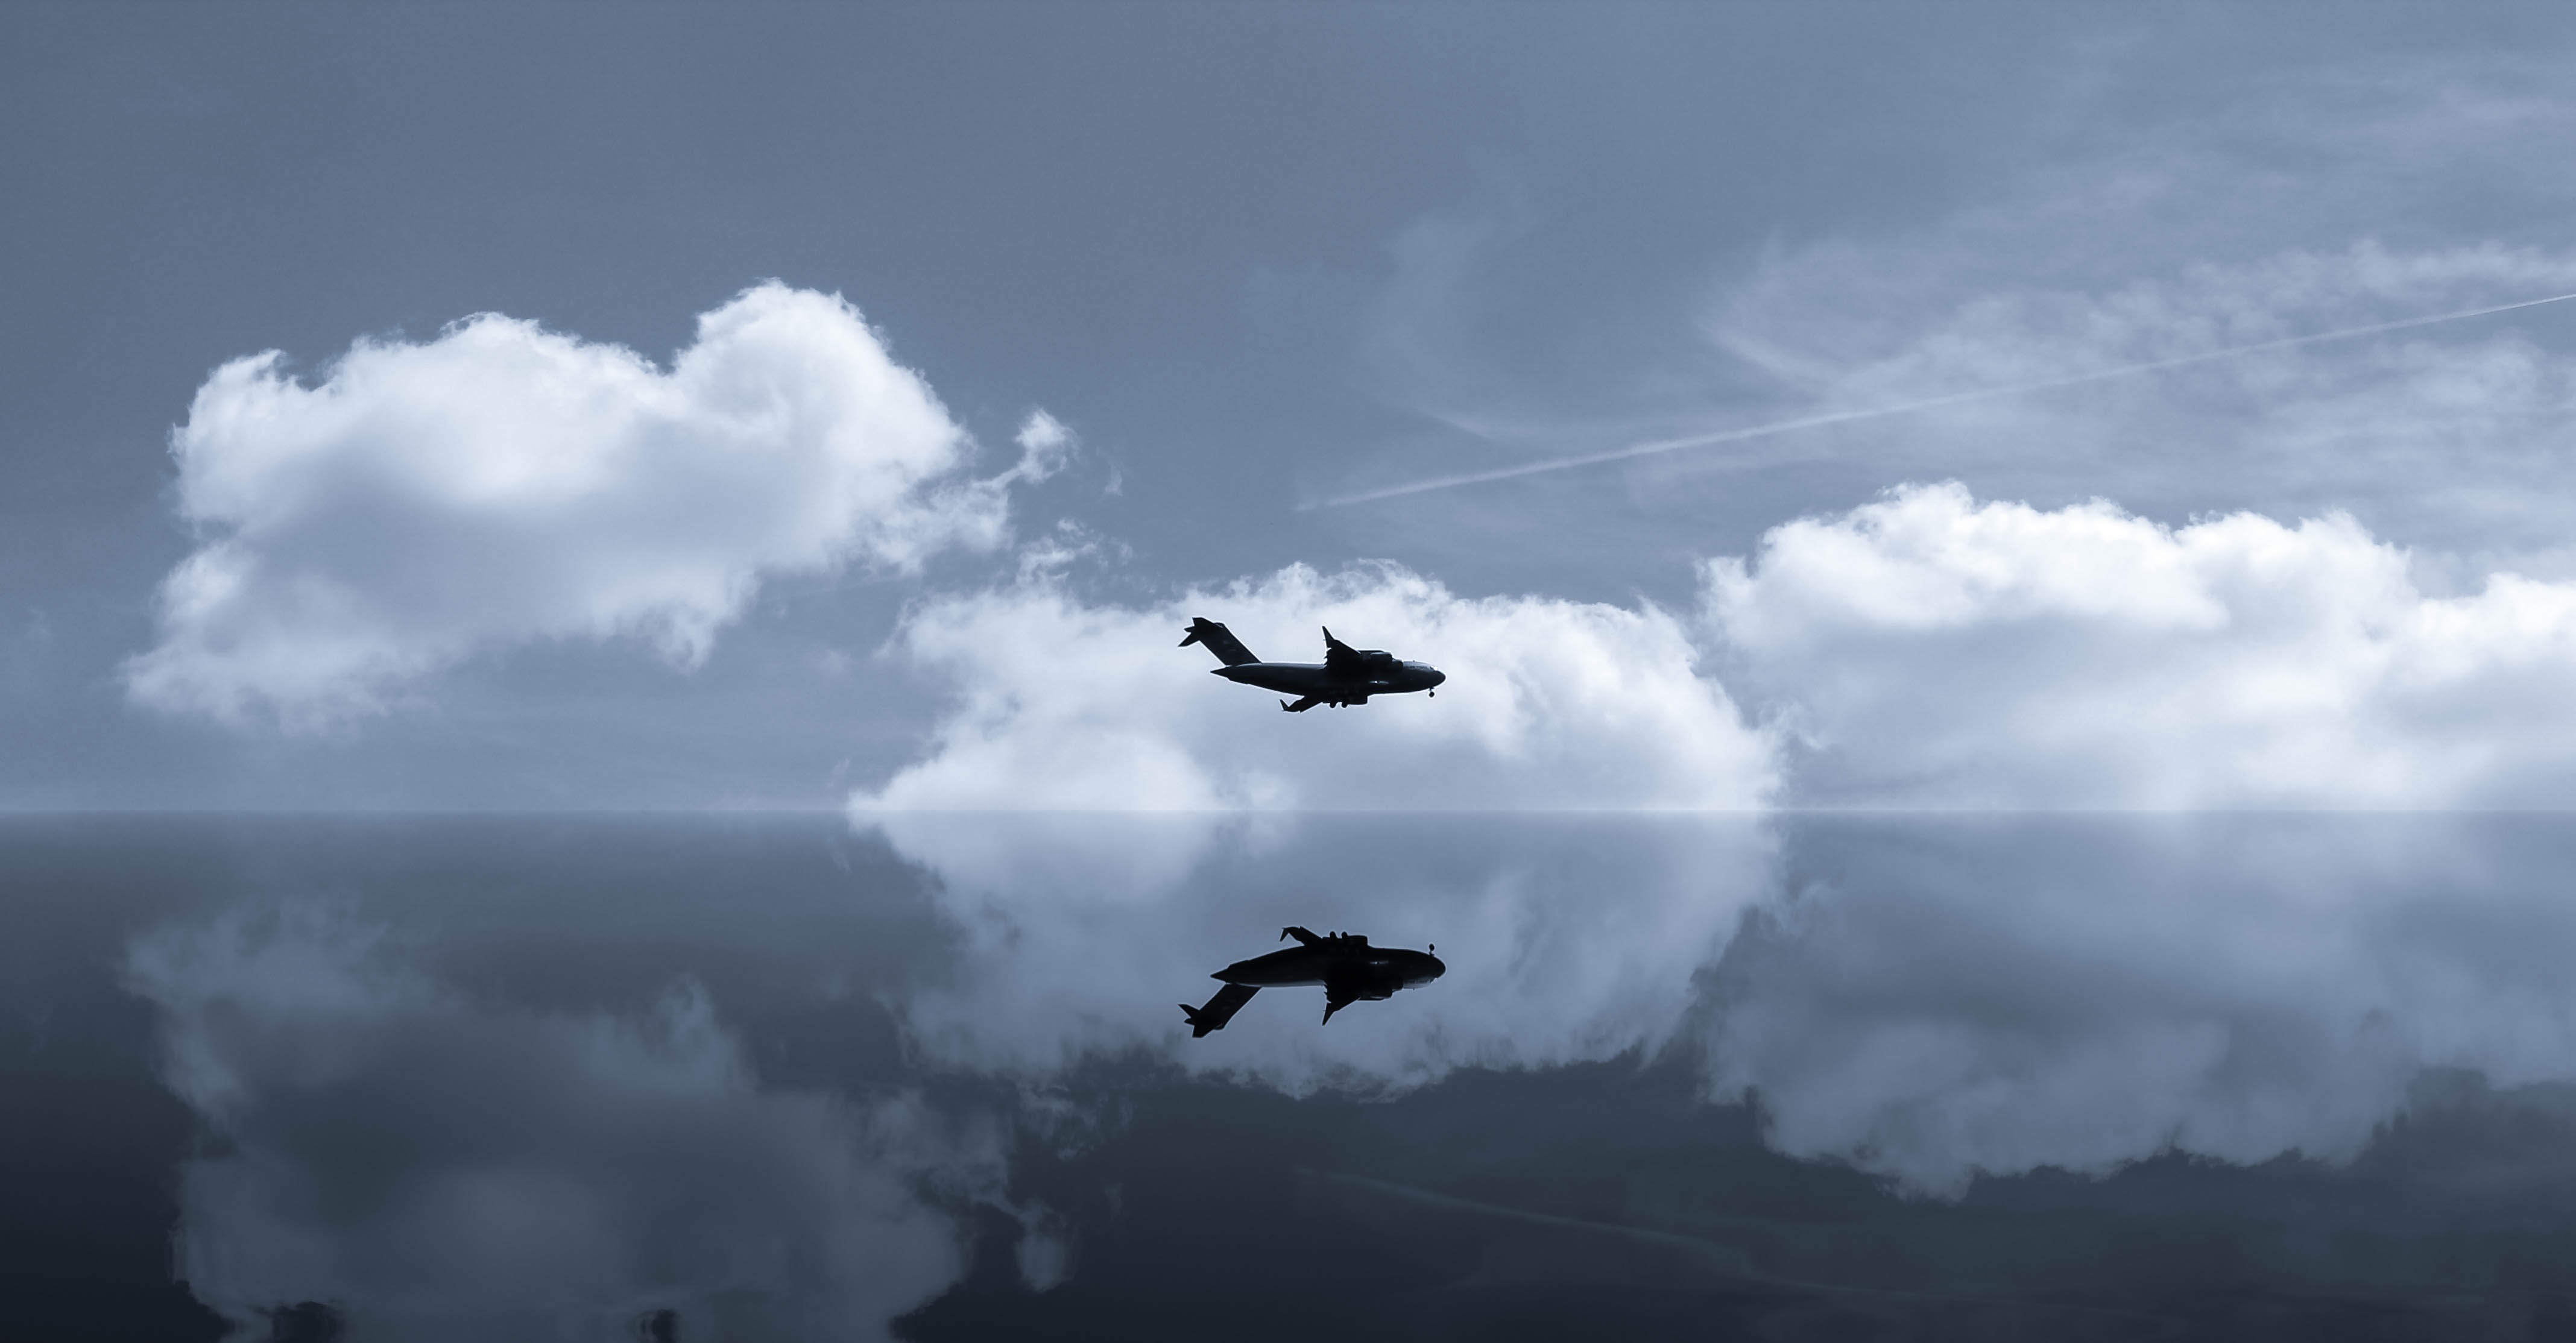 1920x1080 Background plane, sky, clouds, reflection, miscellanea, miscellaneous, flight, airplane, mirror, mirrored